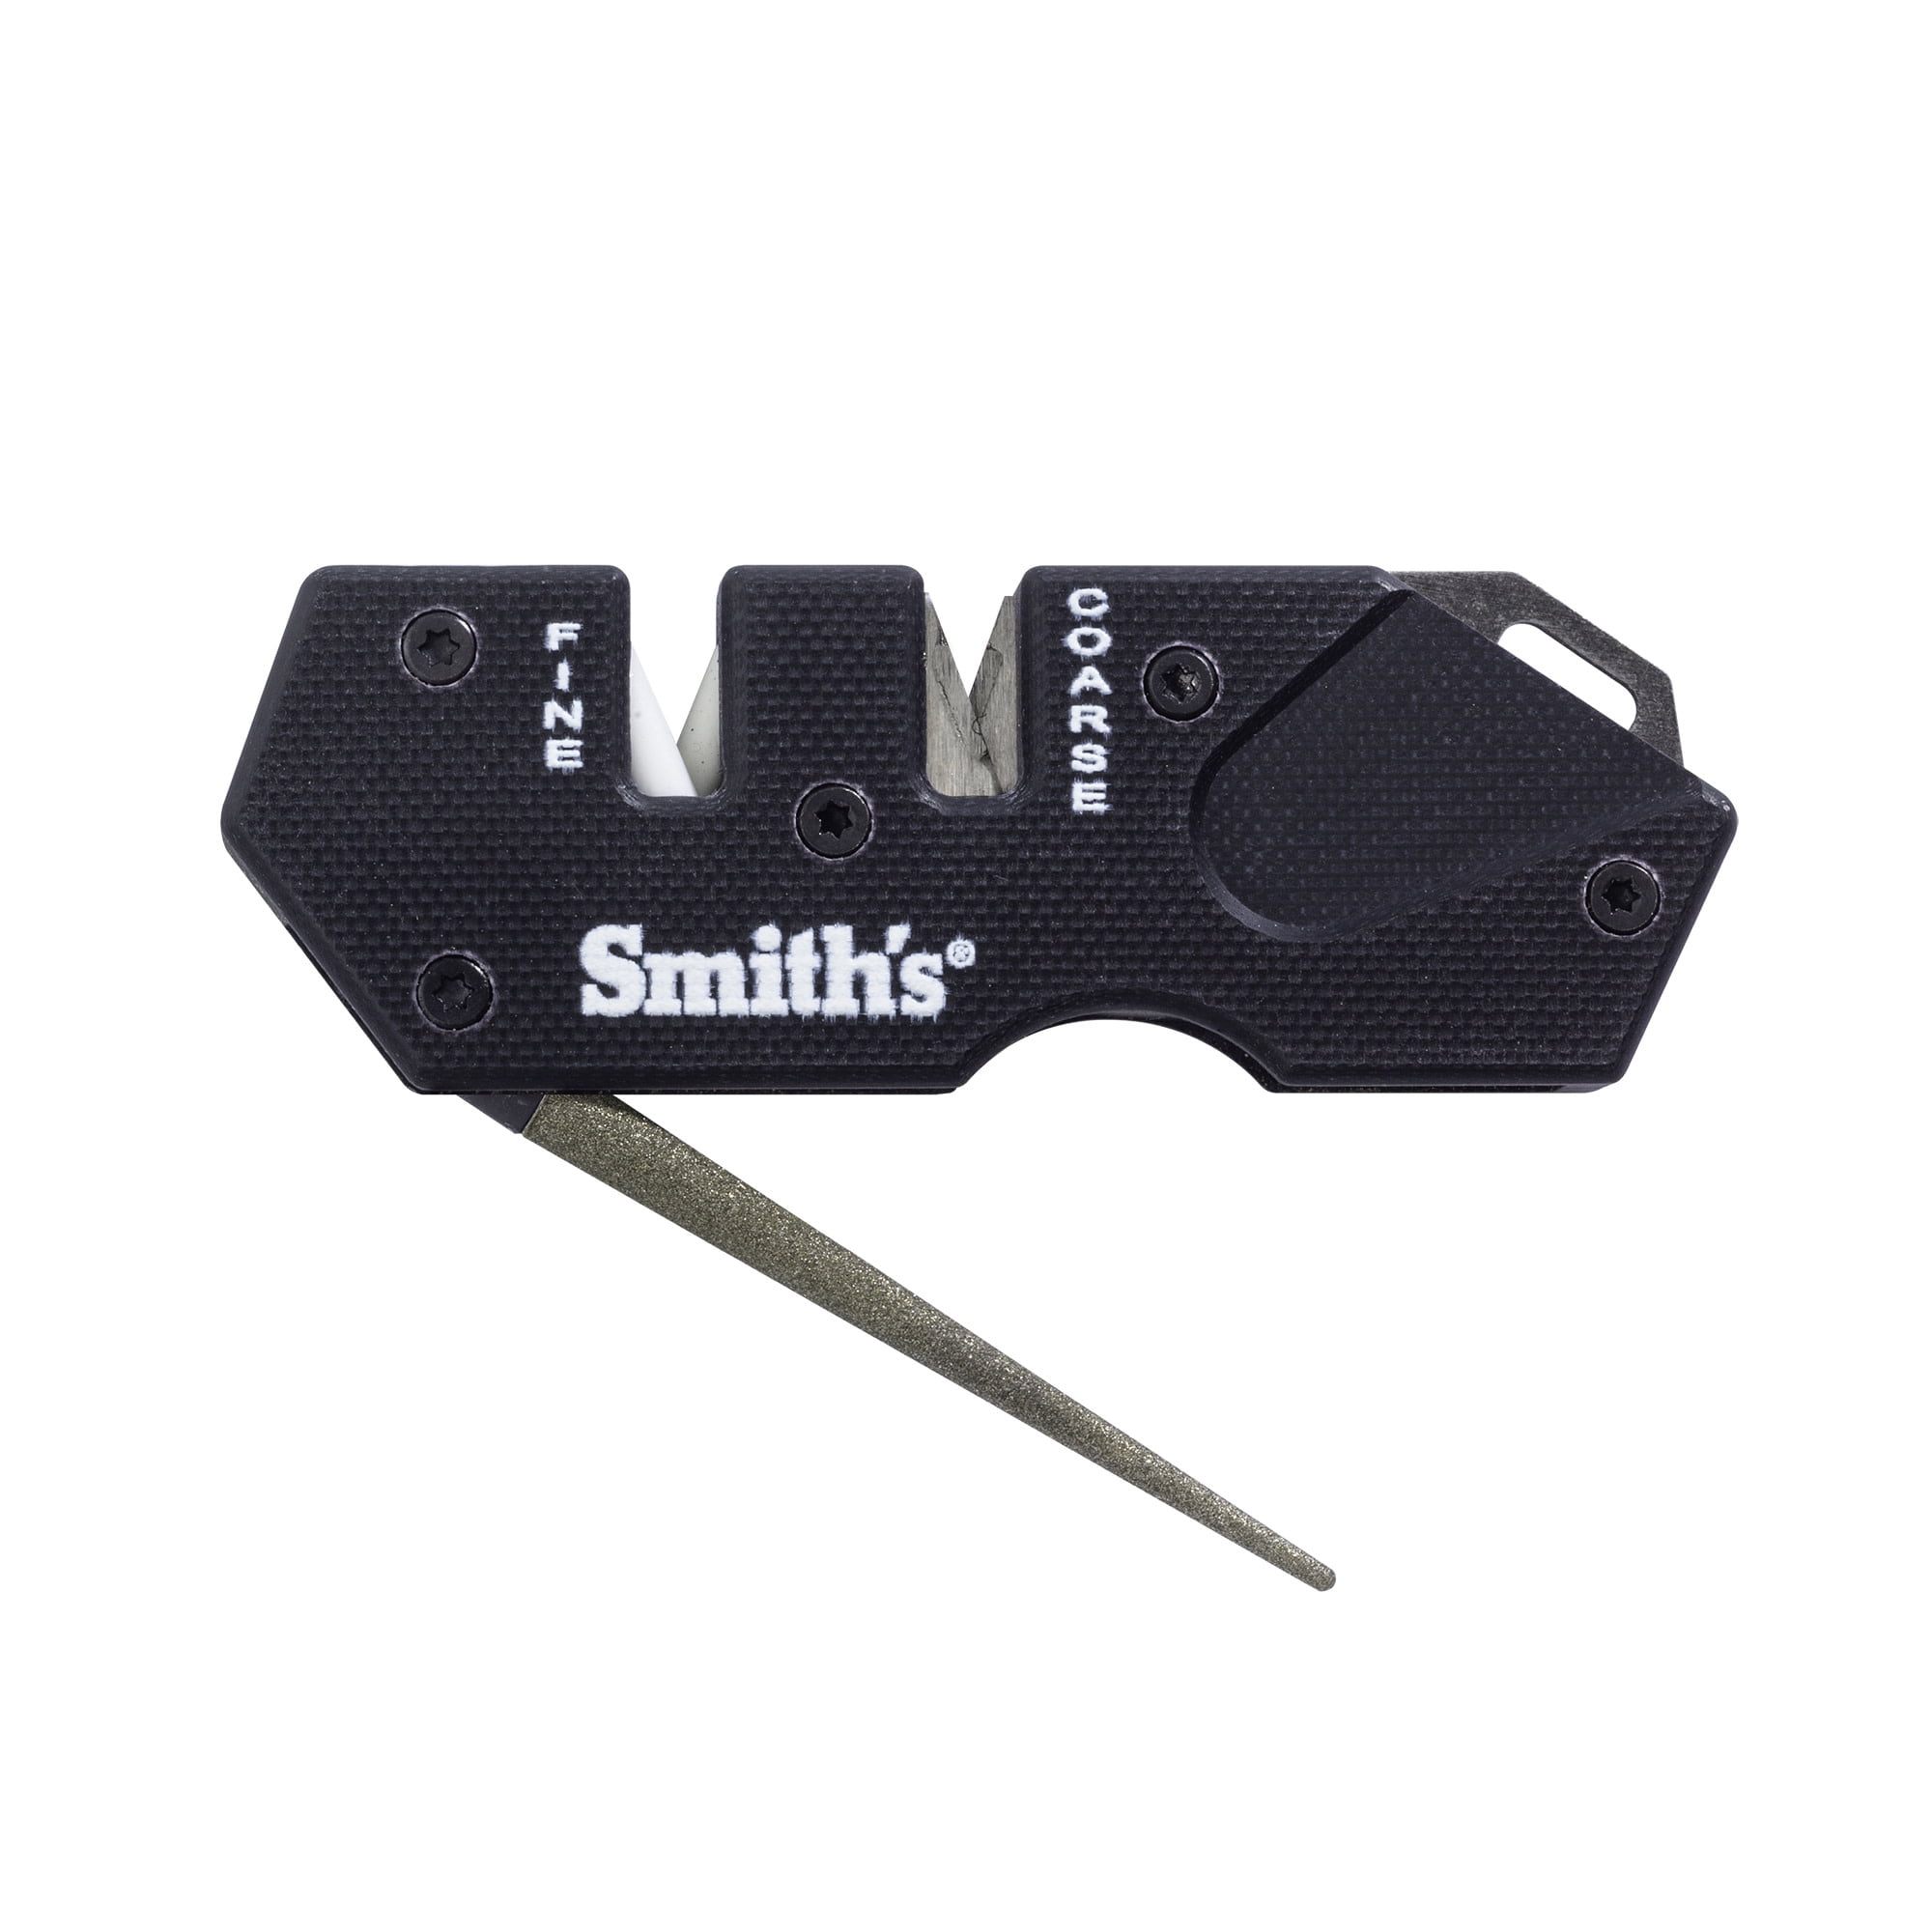 Smith's G10 Sharpener 51175